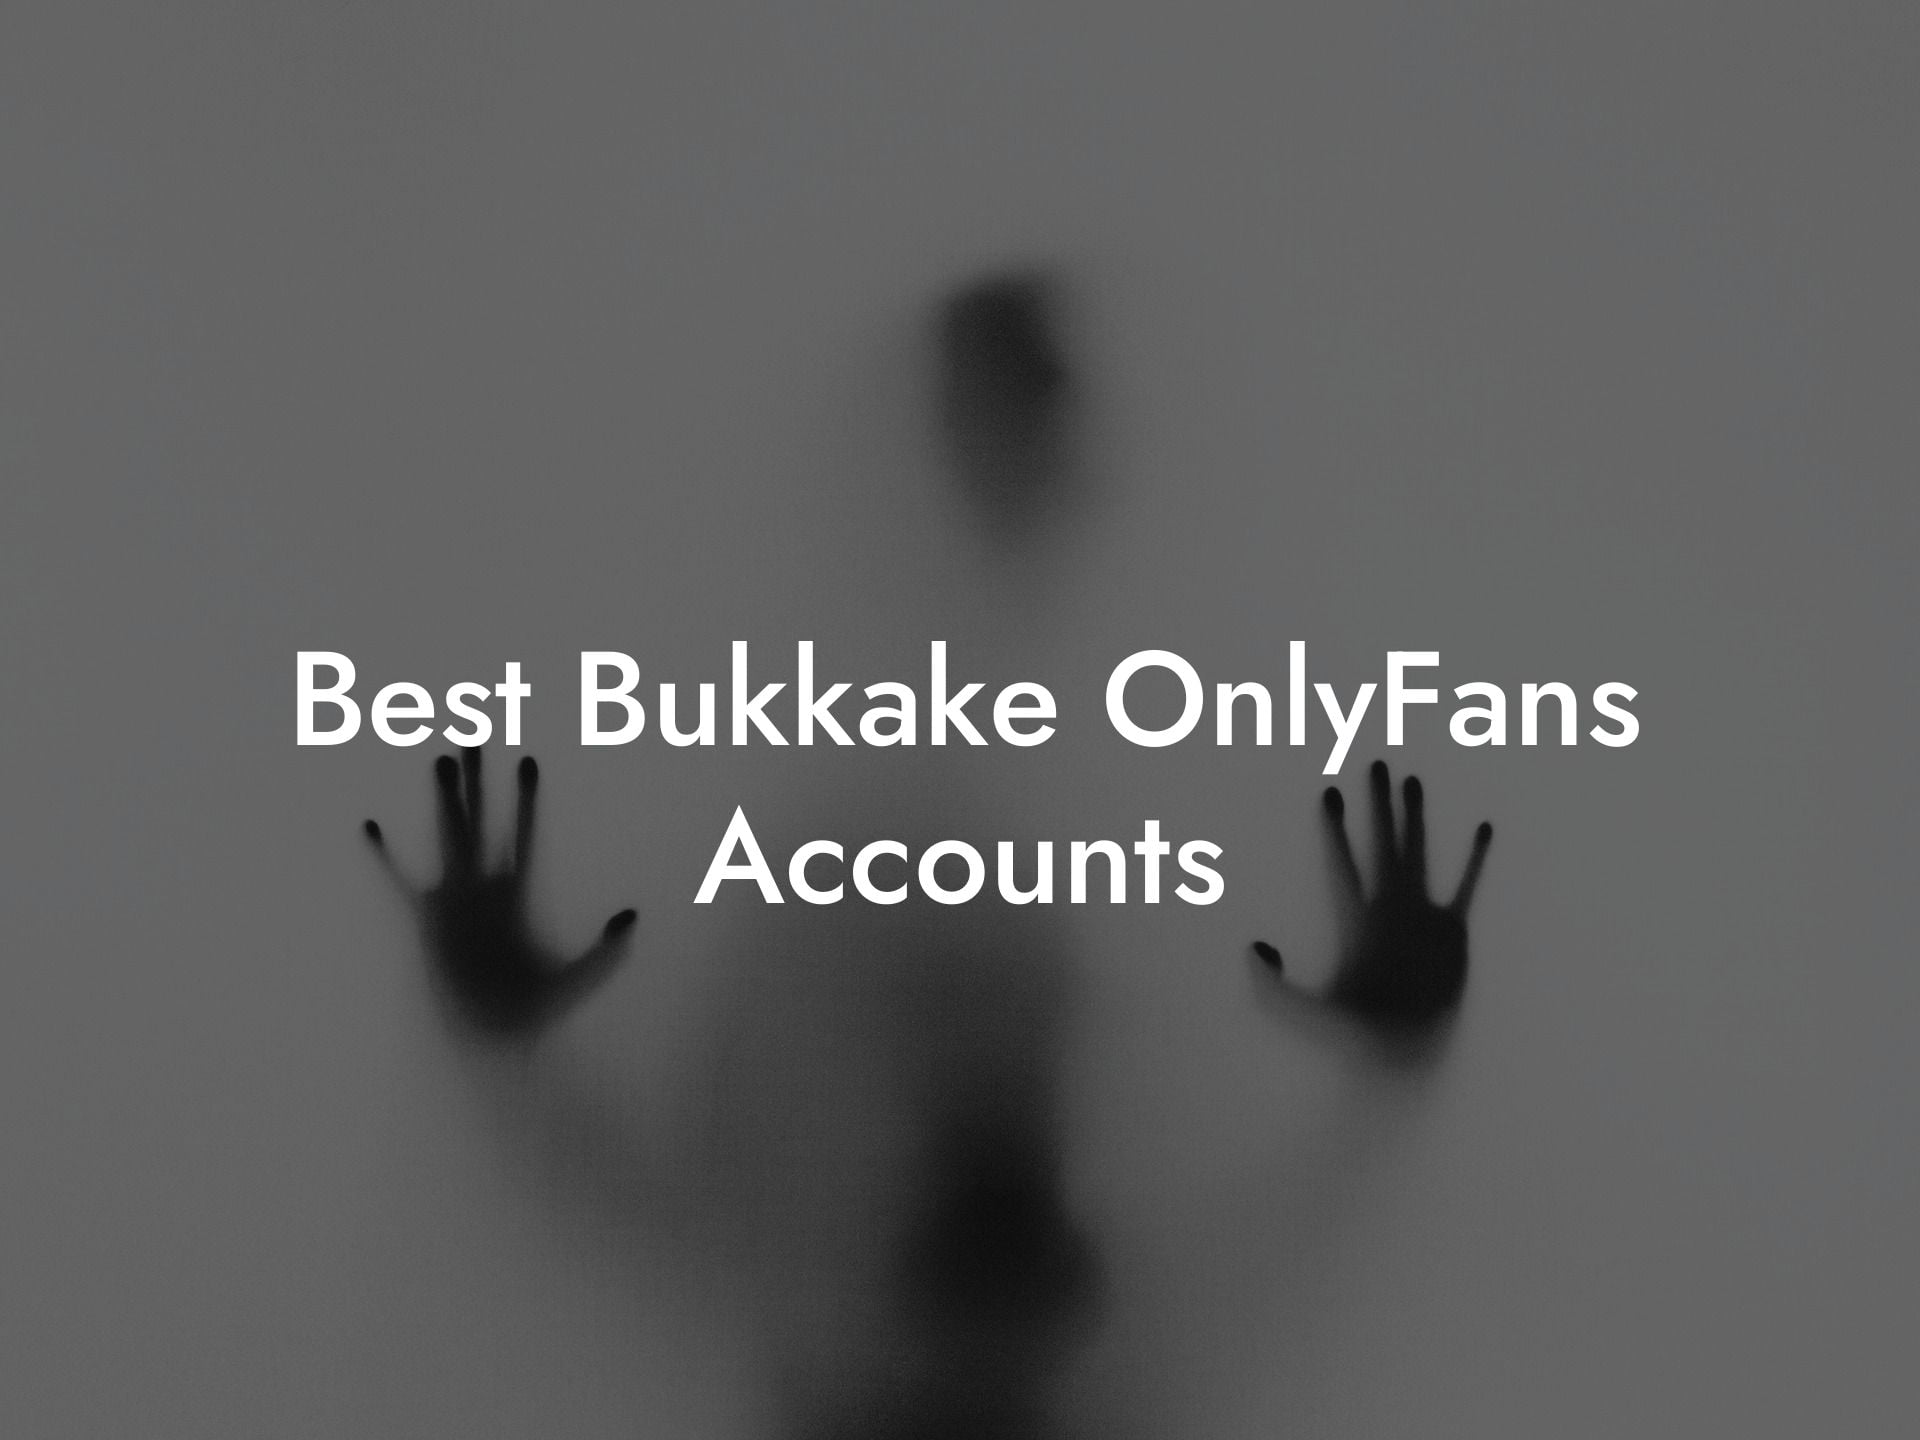 Best Bukkake OnlyFans Accounts